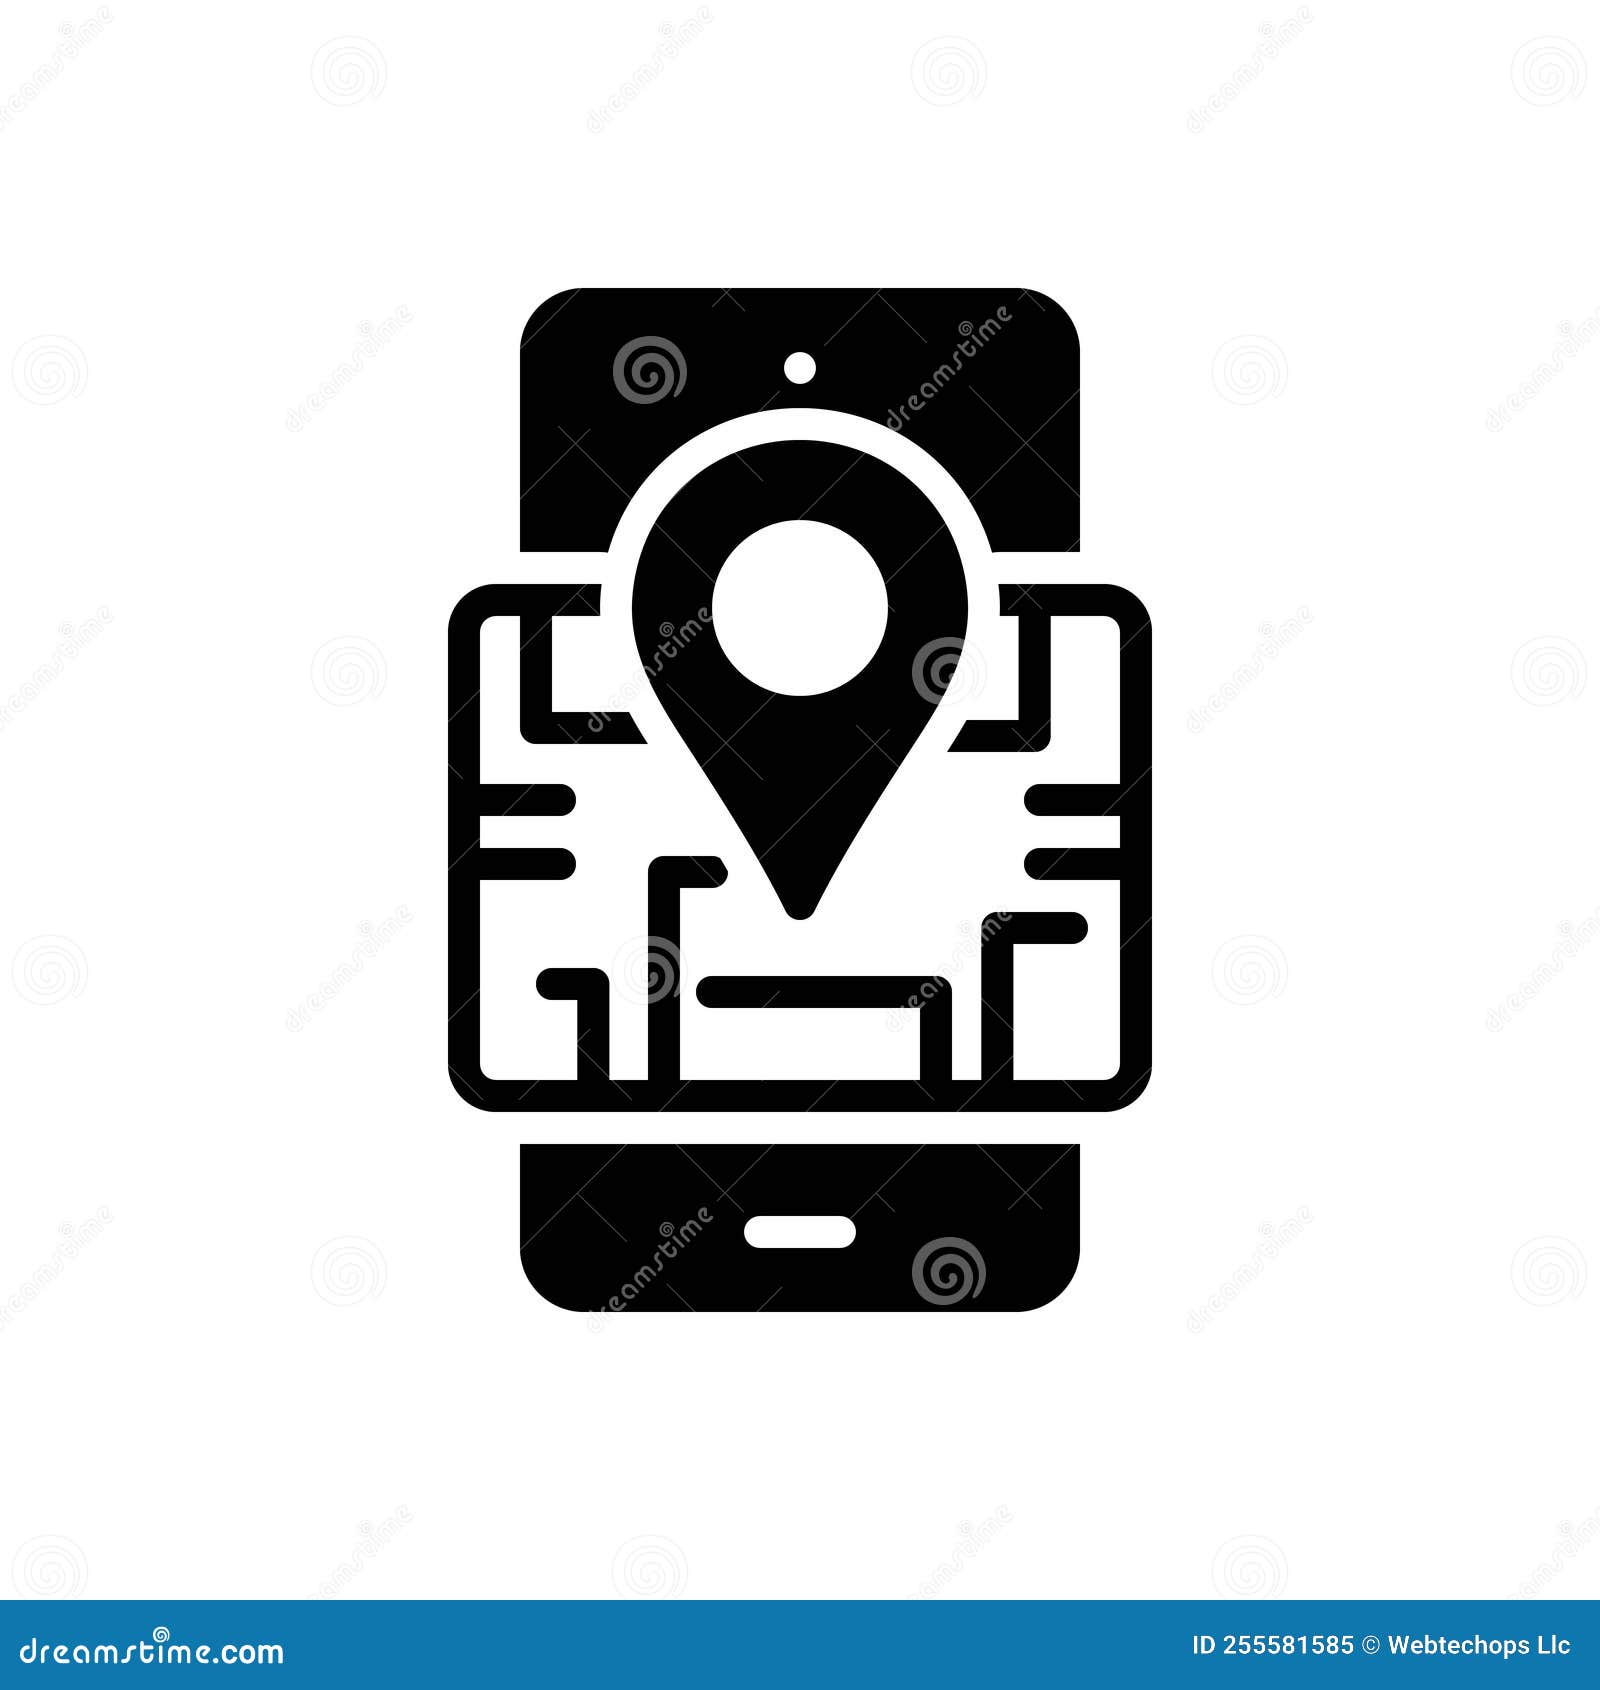 black solid icon for venue, mobile and locale